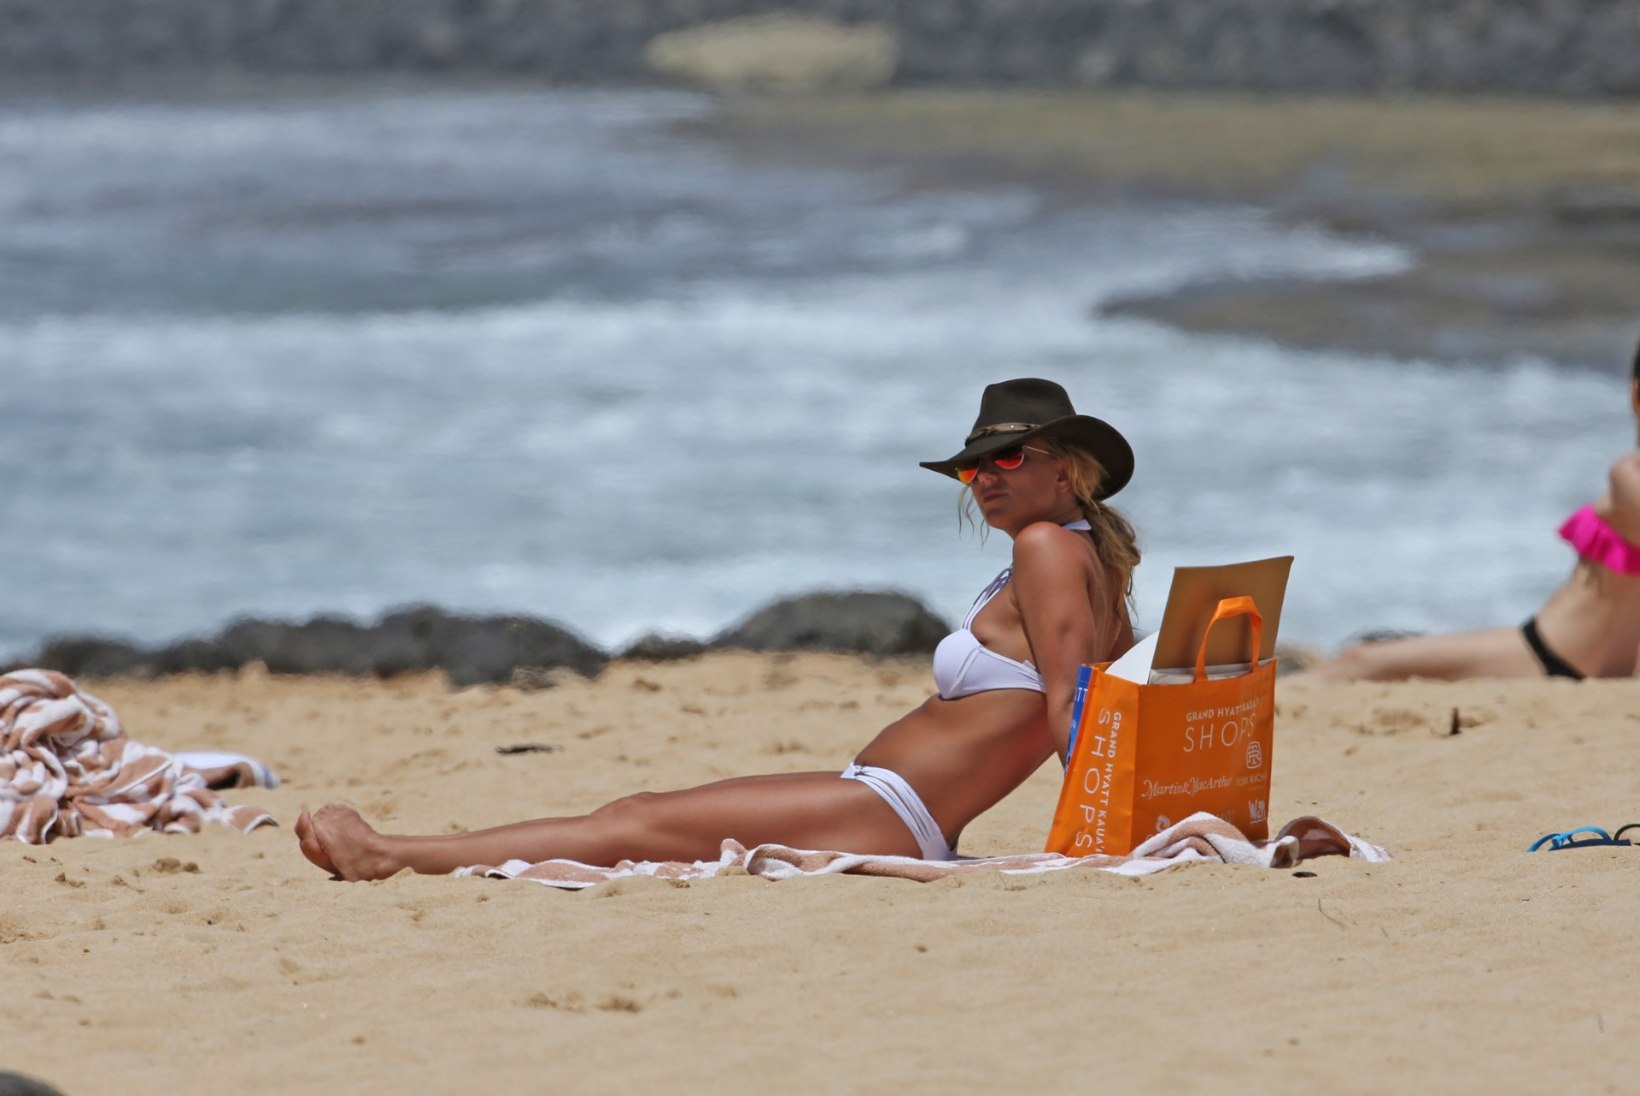 FOTOD | Britney Spears näitas nappides bikiinides rannakeha